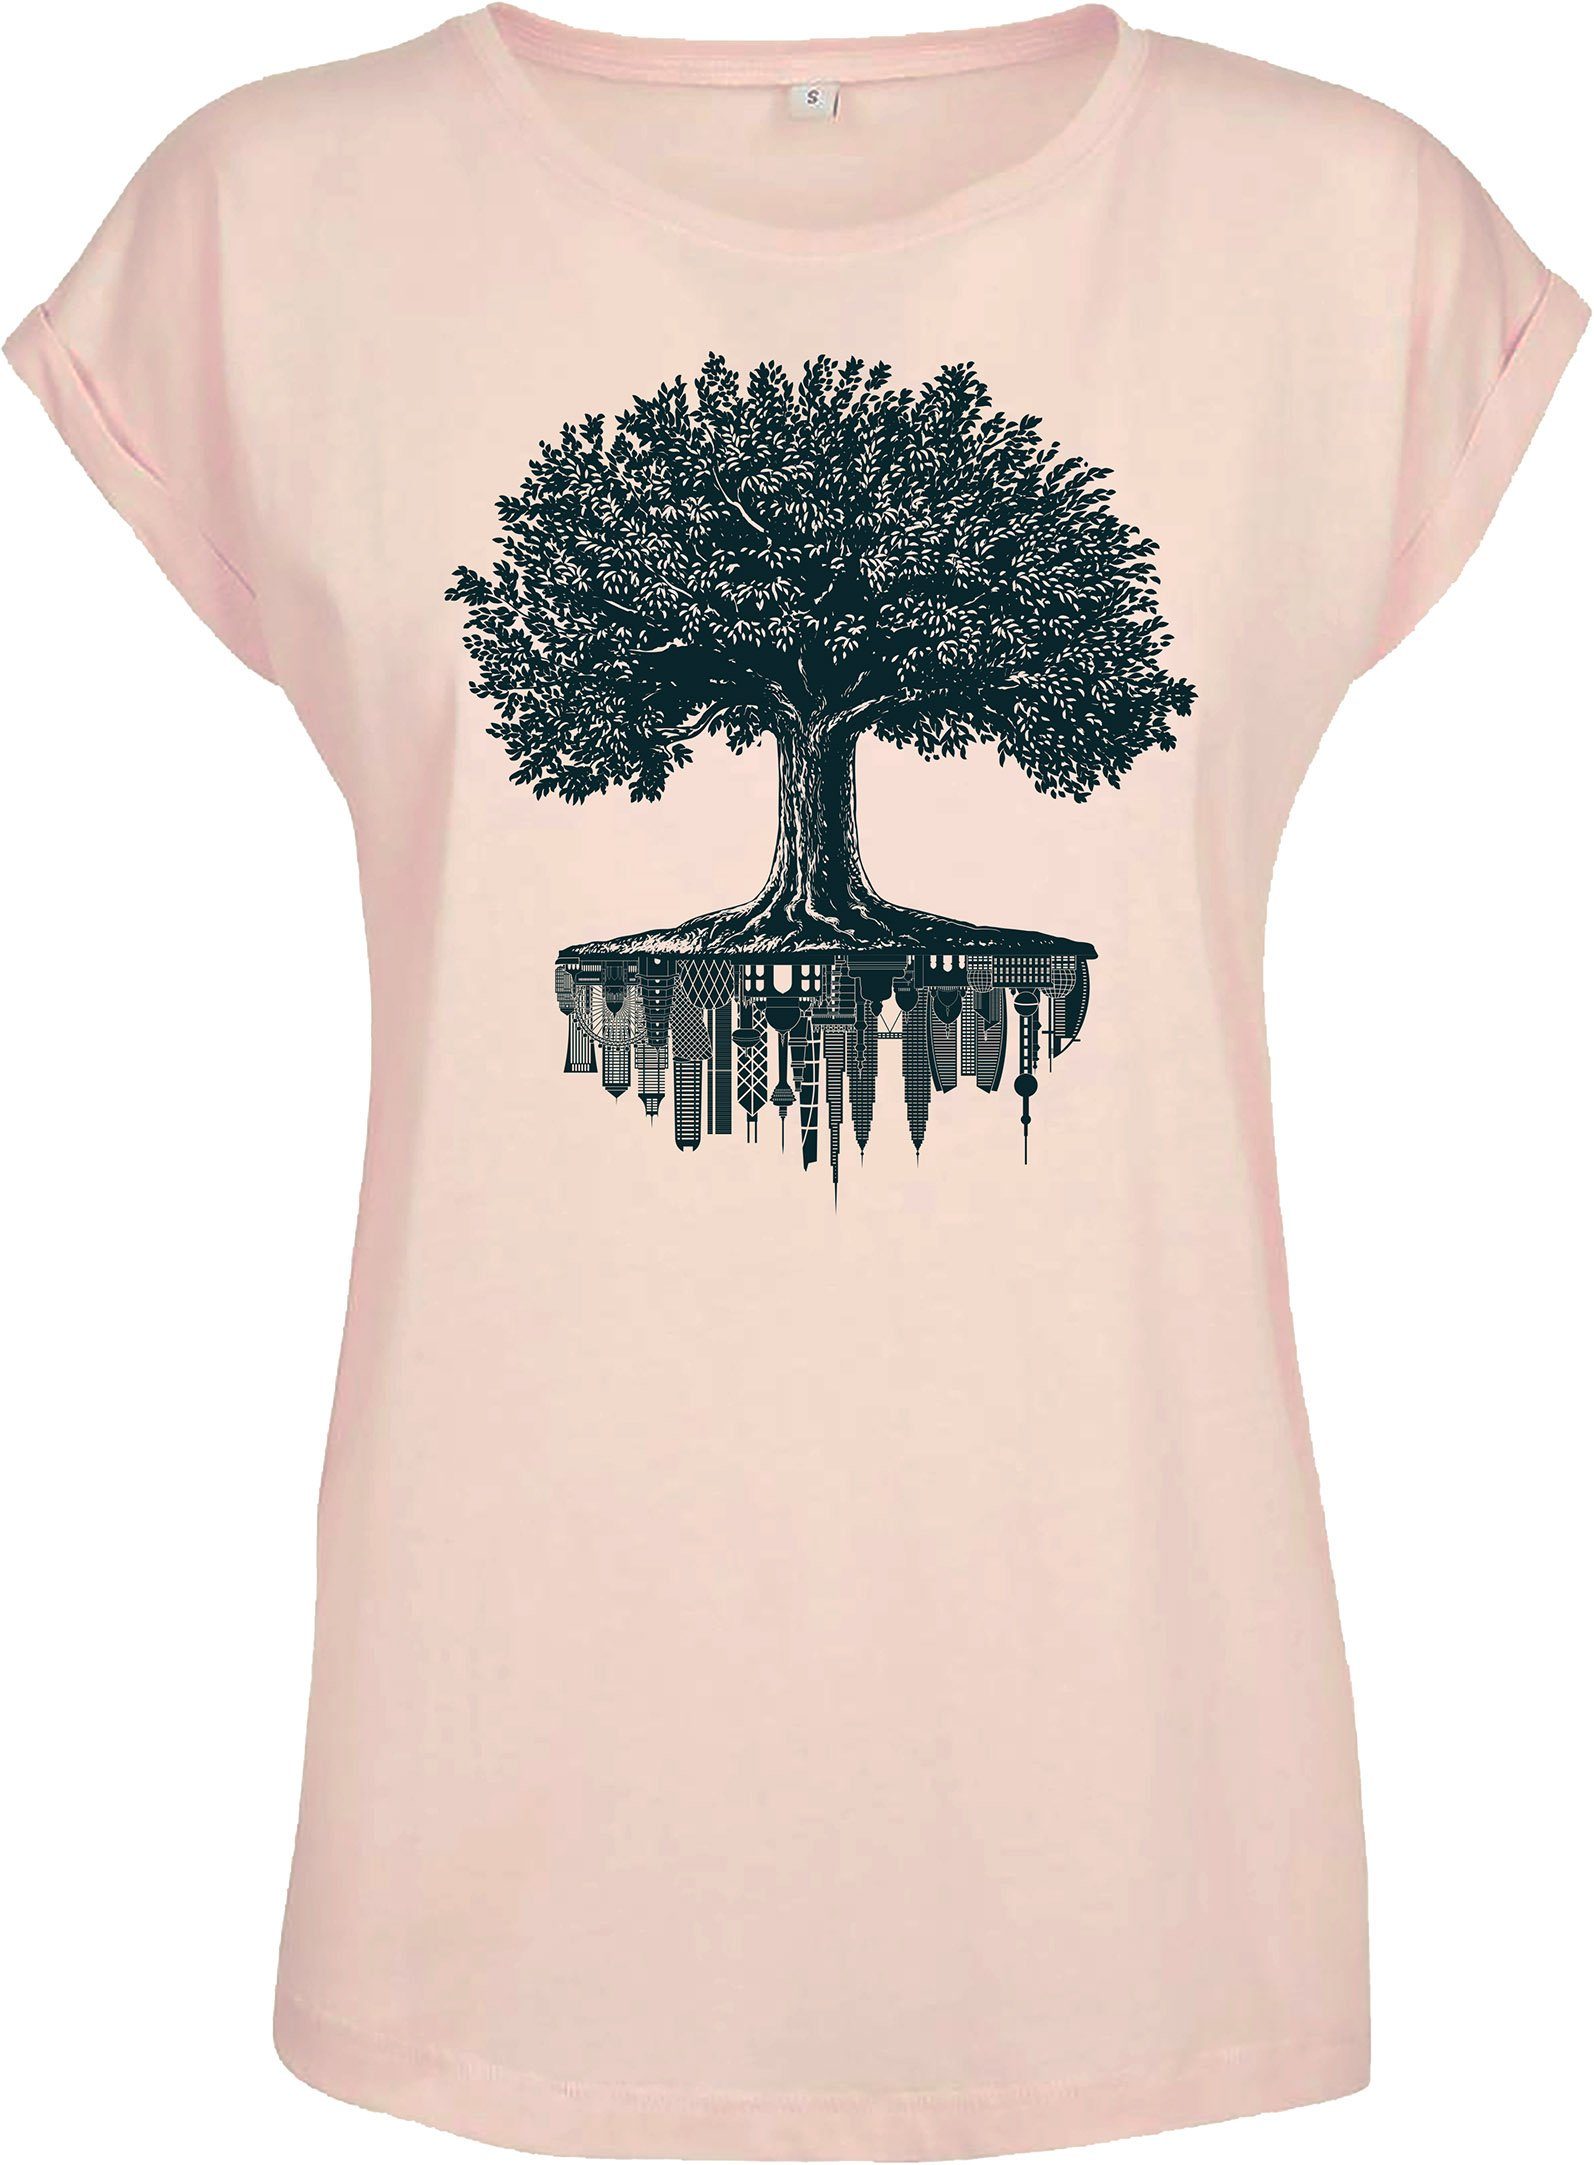 Baddery Print-Shirt Garten T-Shirt Damen : Forest City - Frauen Tshirt - Nature Shirt Baum, hochwertiger Siebdruck, aus Baumwolle